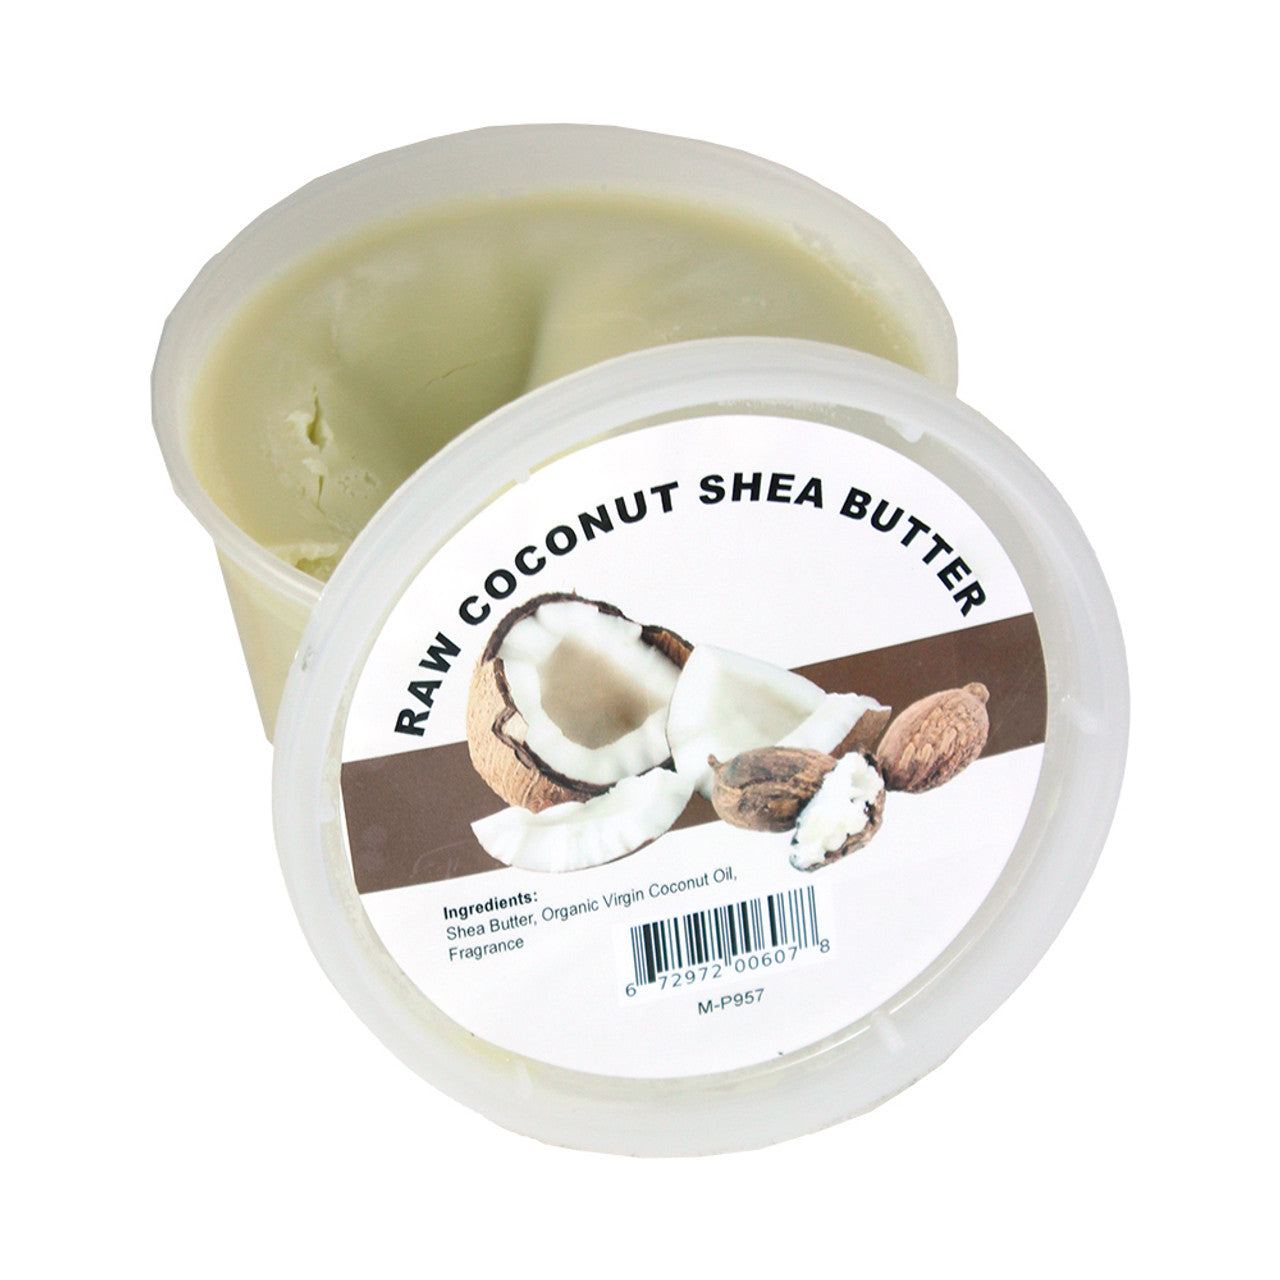 Coconut shea butter